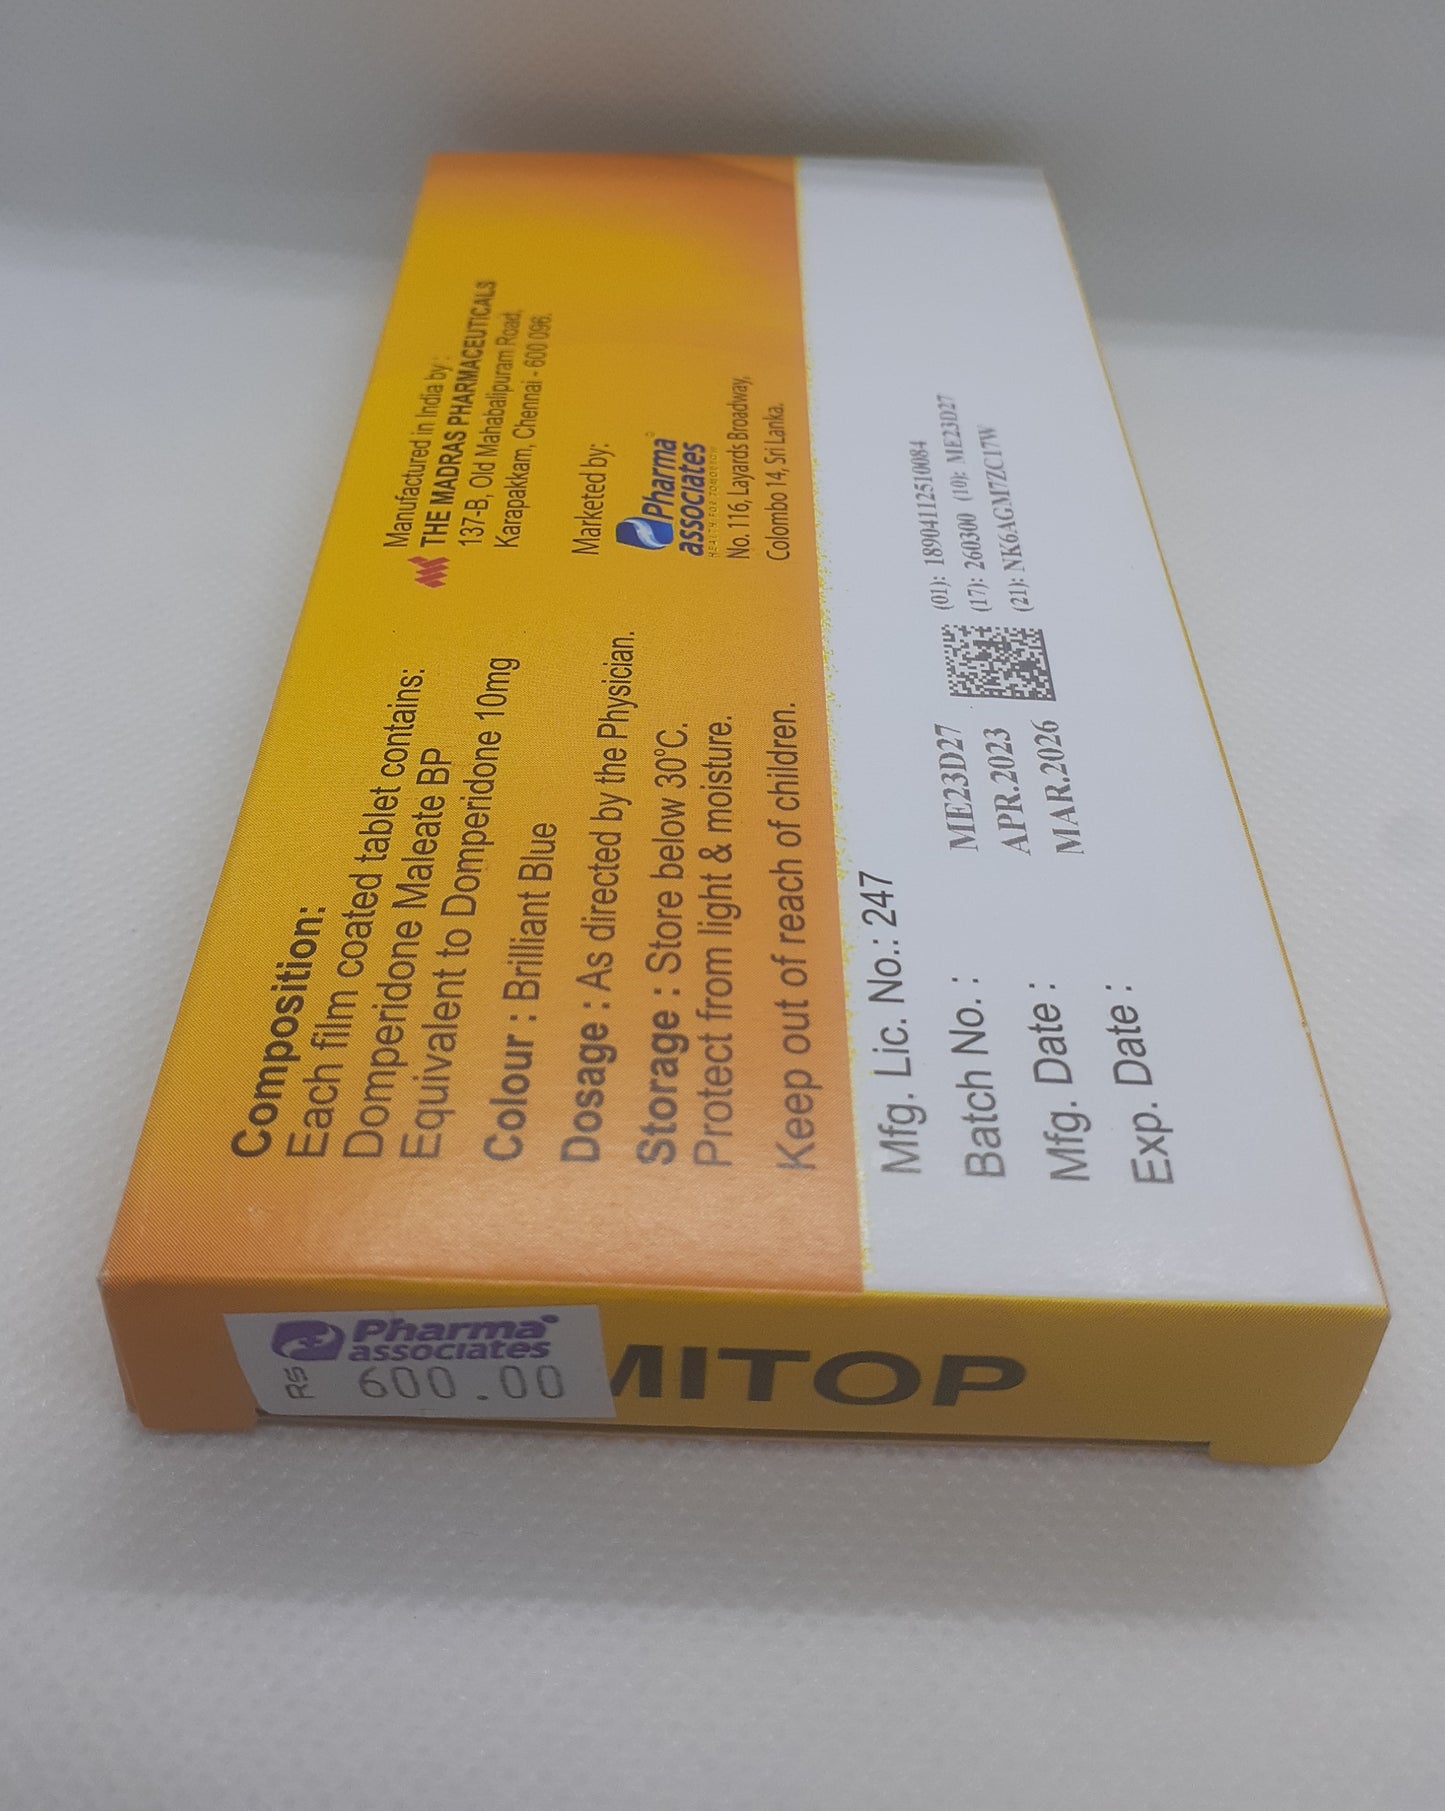 Emitop 10 Box ( 1000 pills )